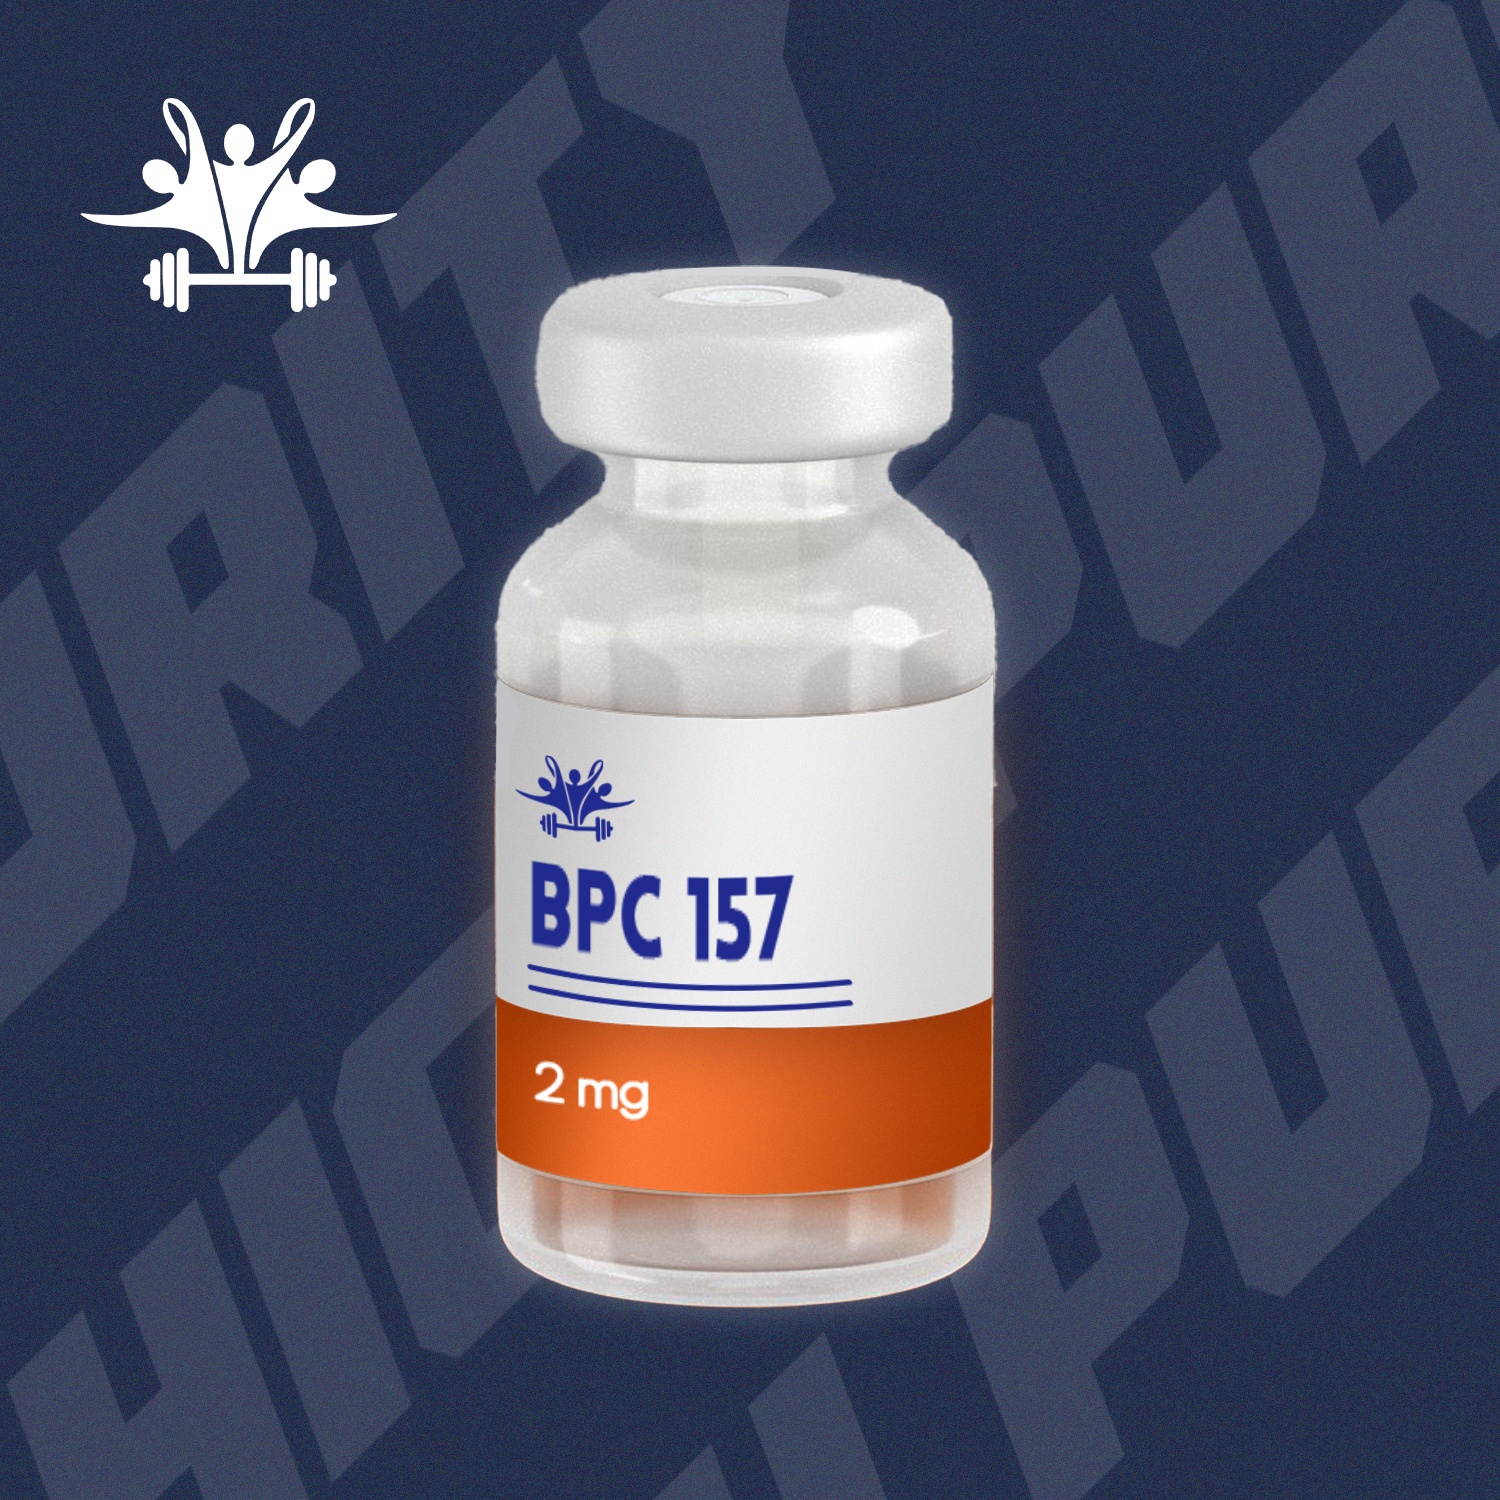 Promote healing pentadecapeptide BPC 157